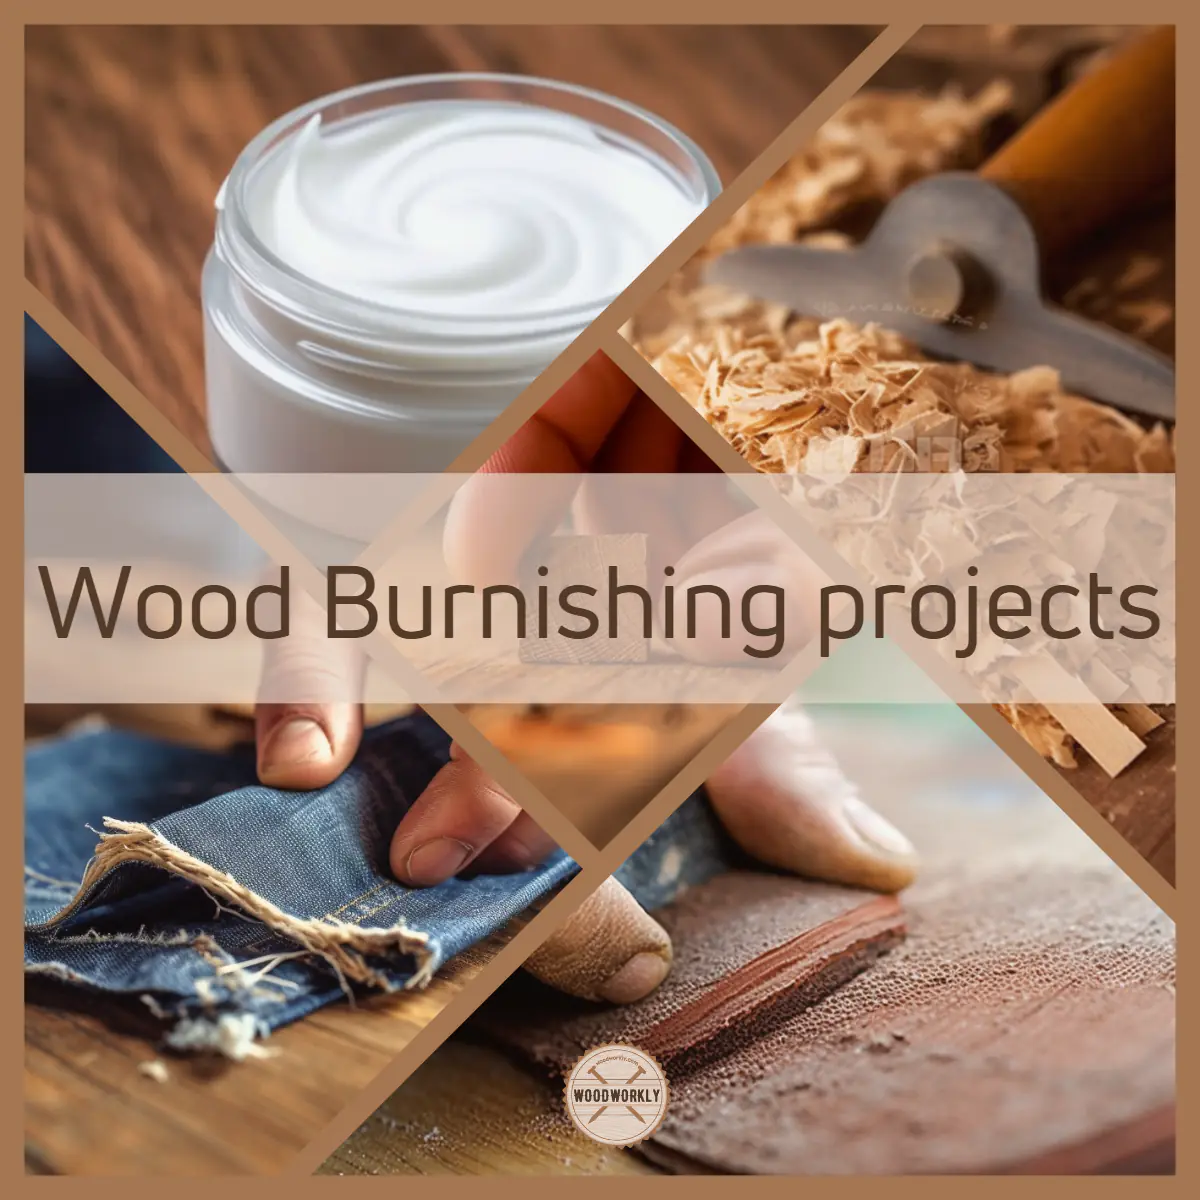 Wood Burnishing projects